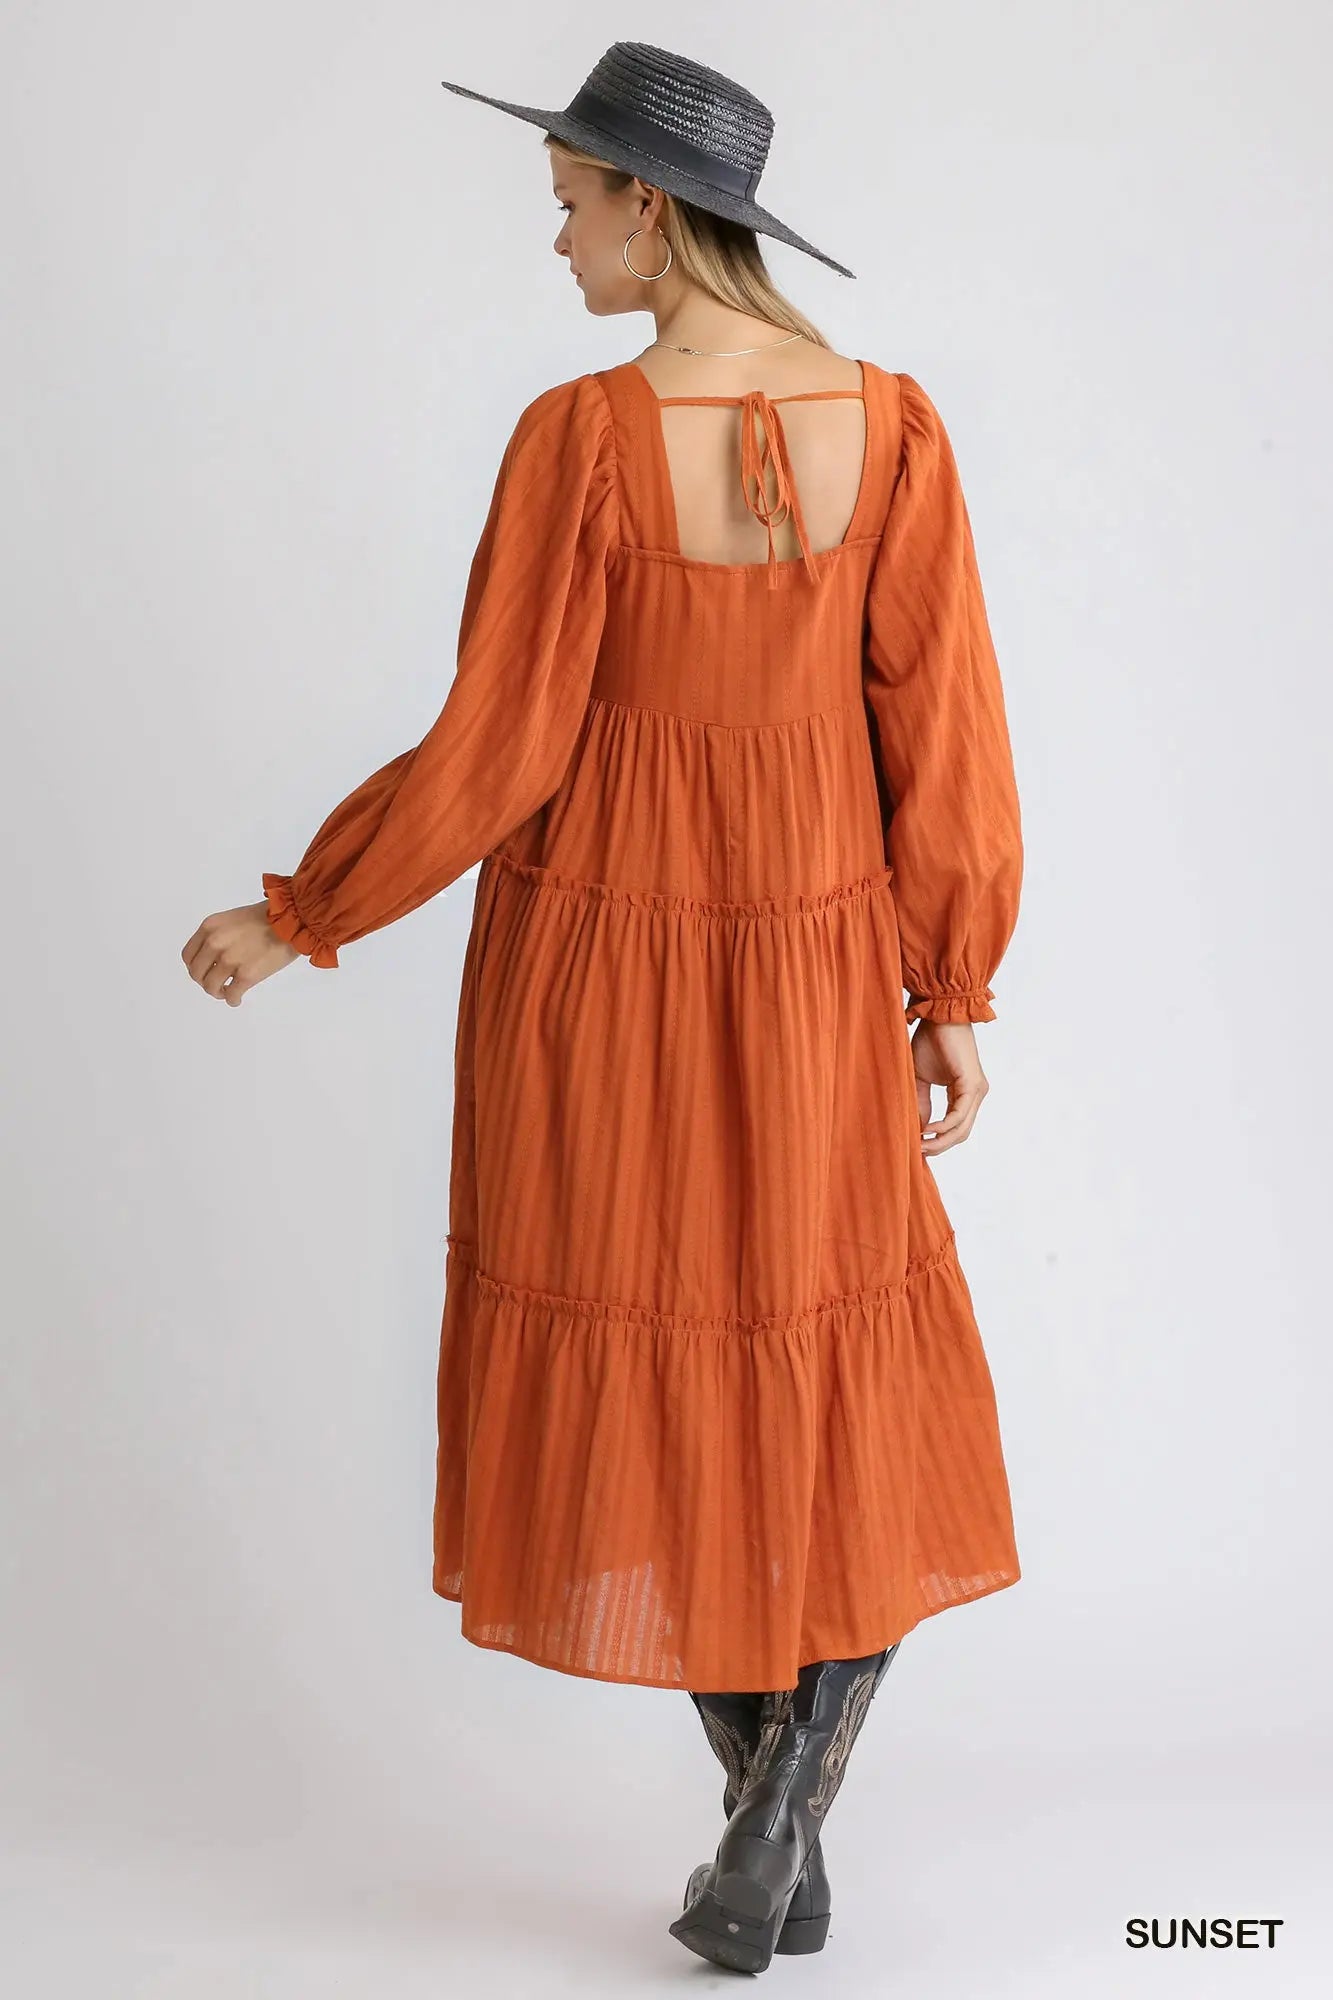 Ruffle Cuffed Long Sleeve Square Neckline Smocked Peasant Midi Dress Sunny EvE Fashion